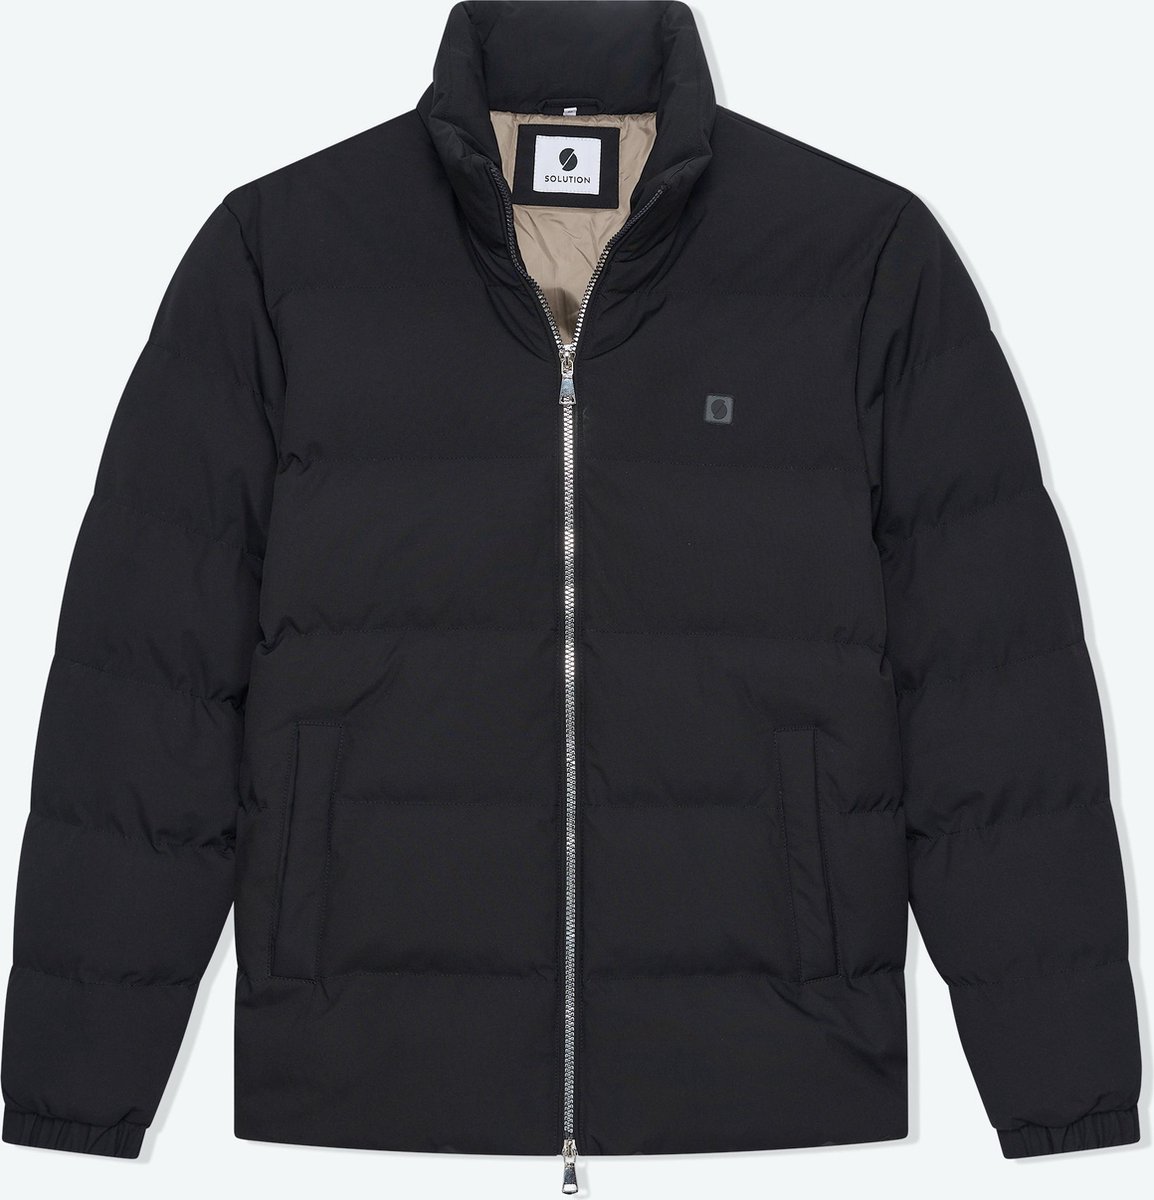 Puffer jacket Jacky Black - XL - Solution Clothing